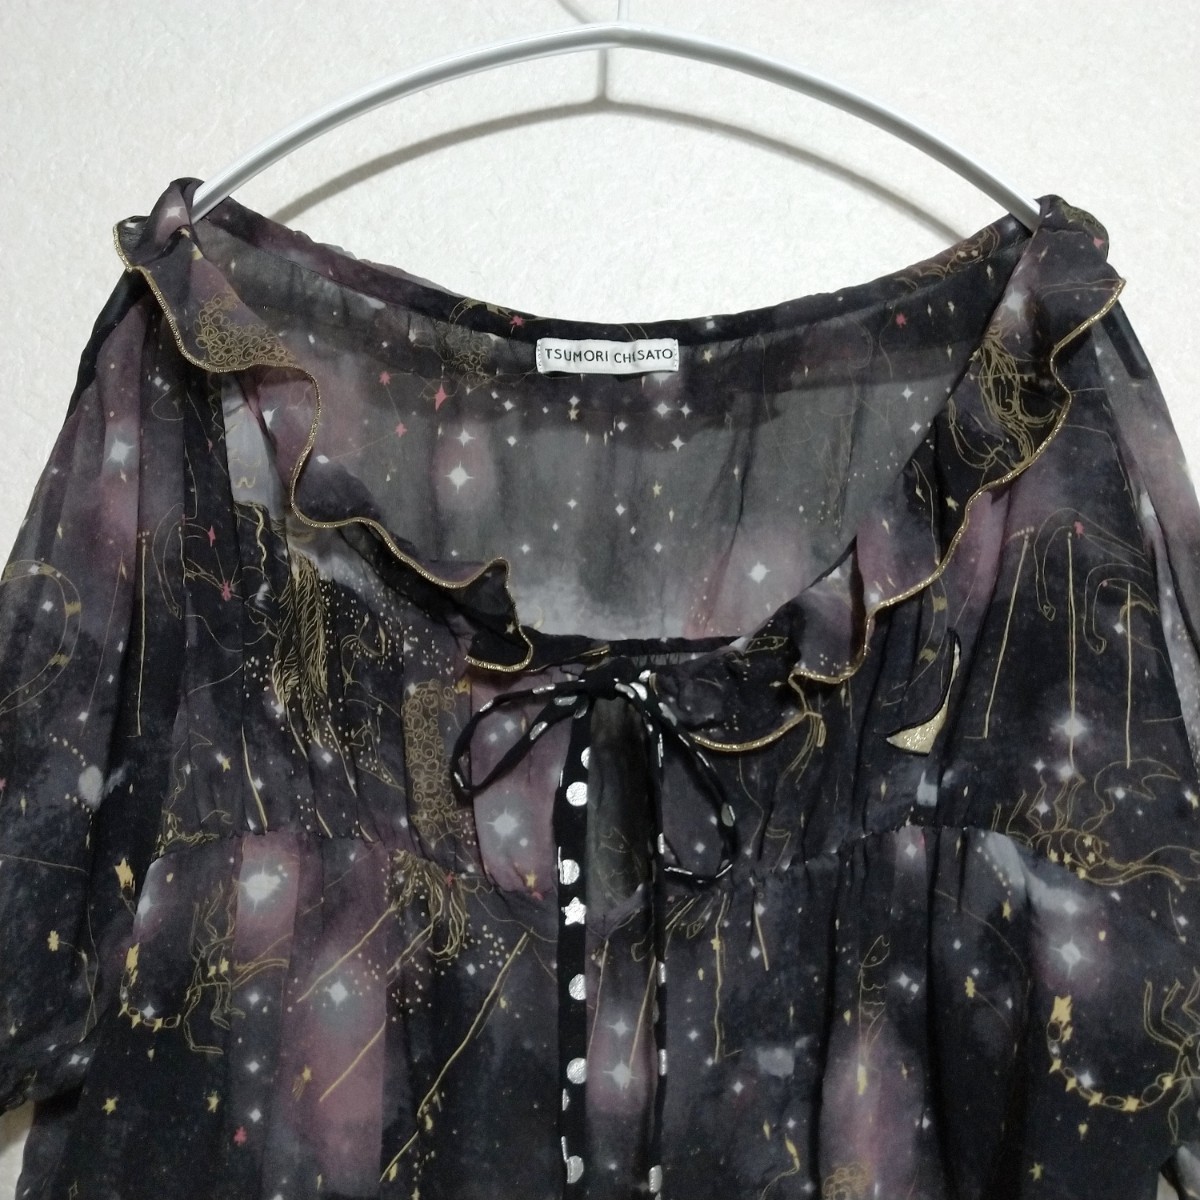  lady's TSUMORI CHISATO Tsumori Chisato to-kyo- Night silk blouse black ground silk size 2